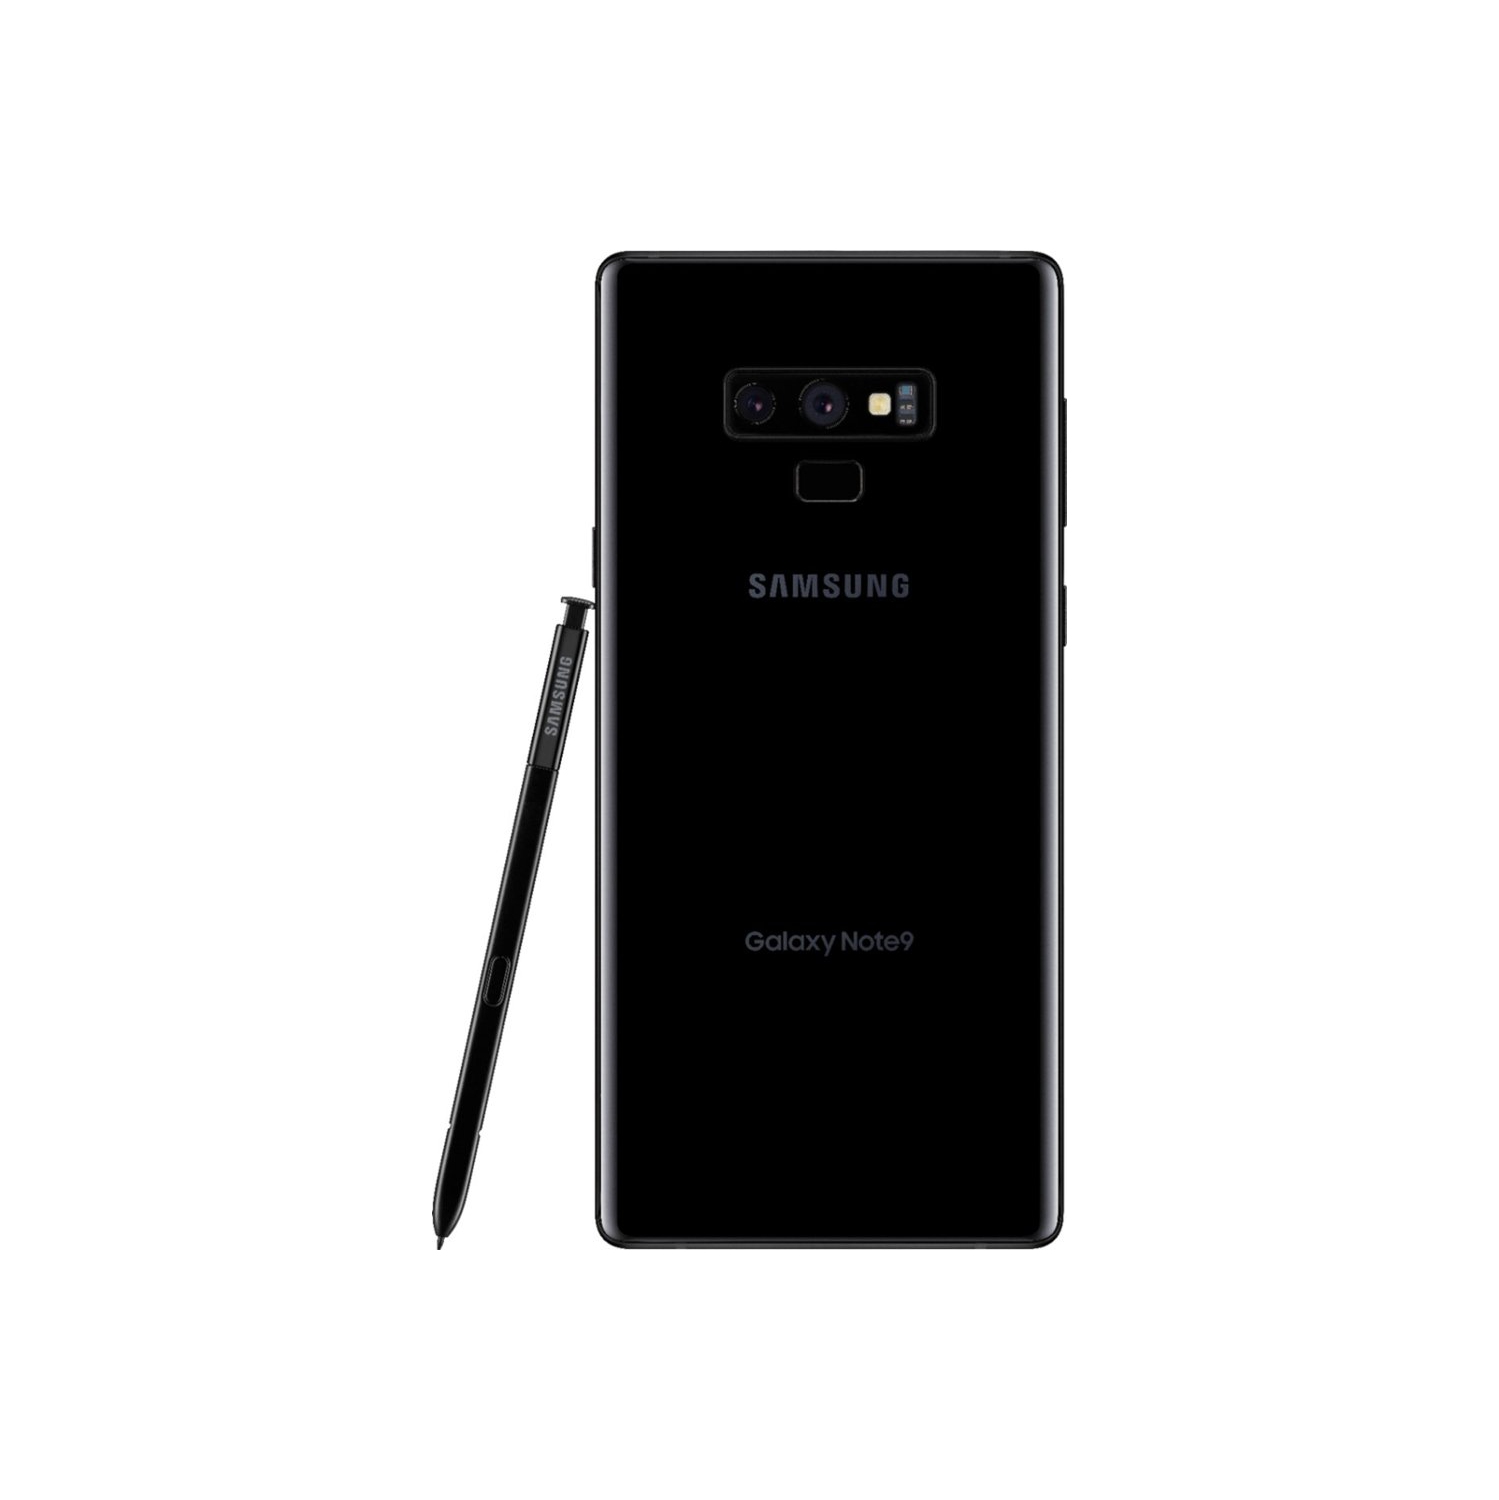 Samsung Galaxy Note9 128GB Smartphone - Midnight Black - Unlocked